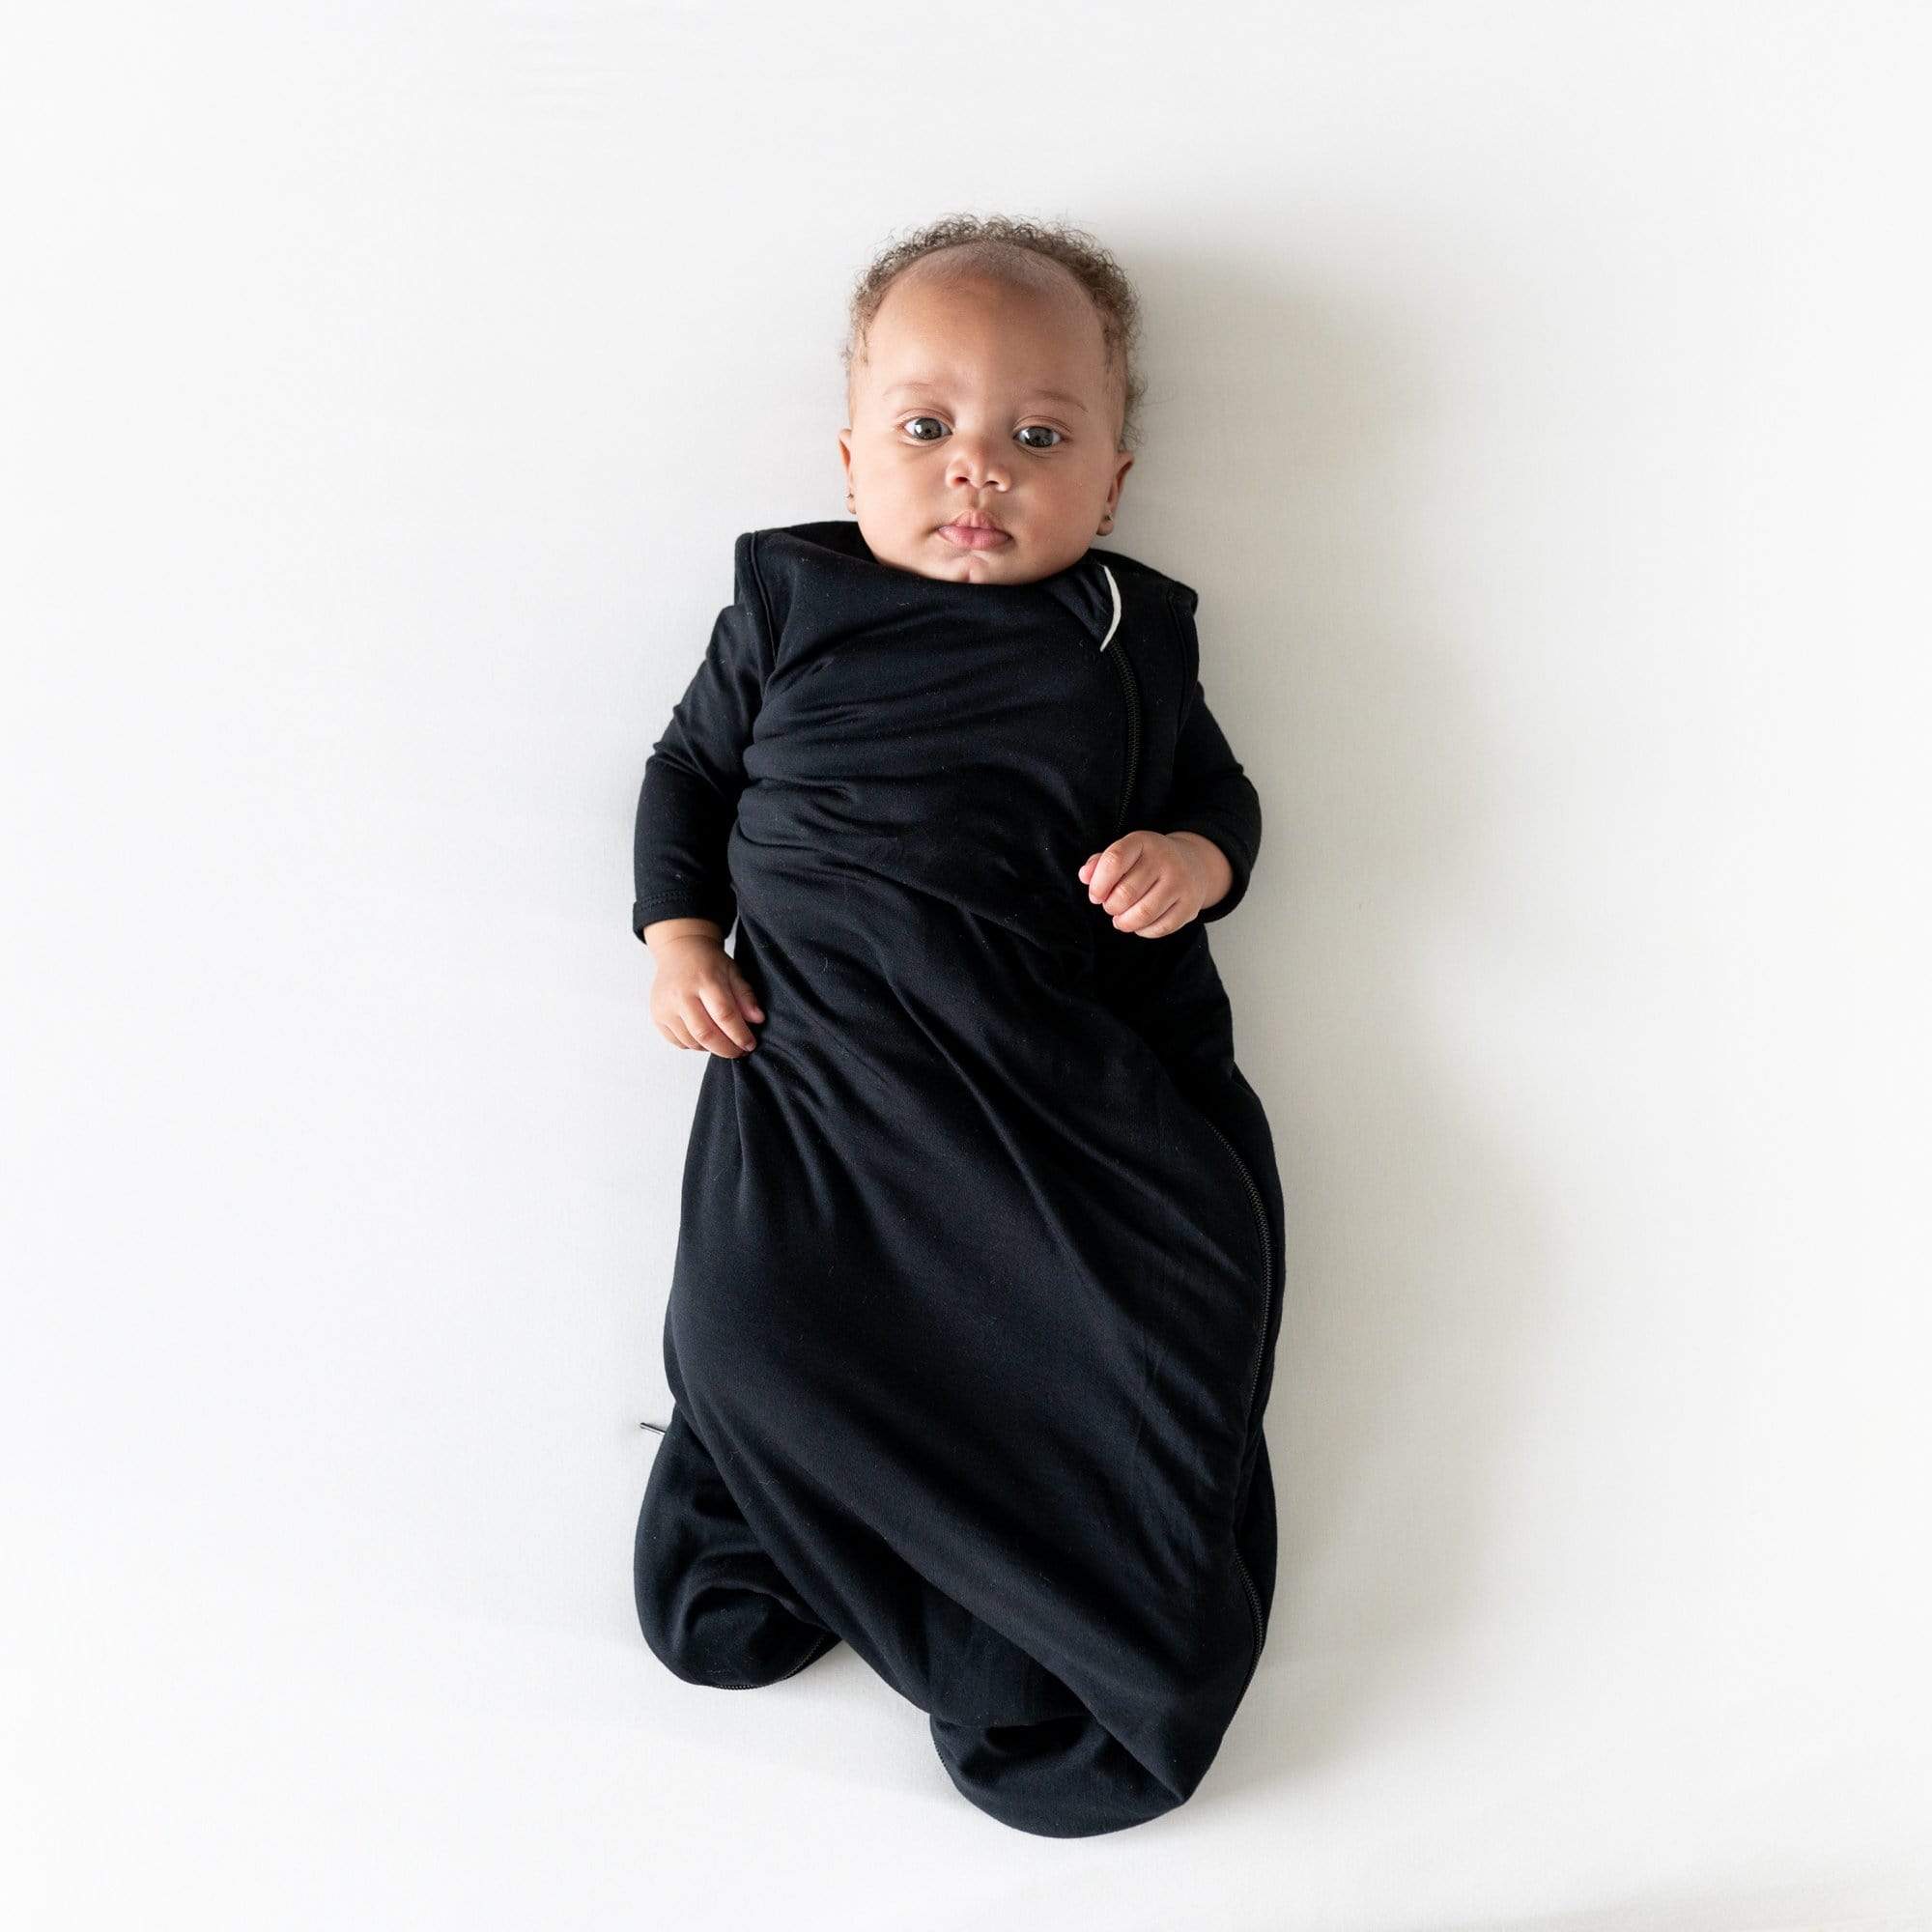 Baby wearing Kyte Baby Sleep Bag in Midnight 1.0